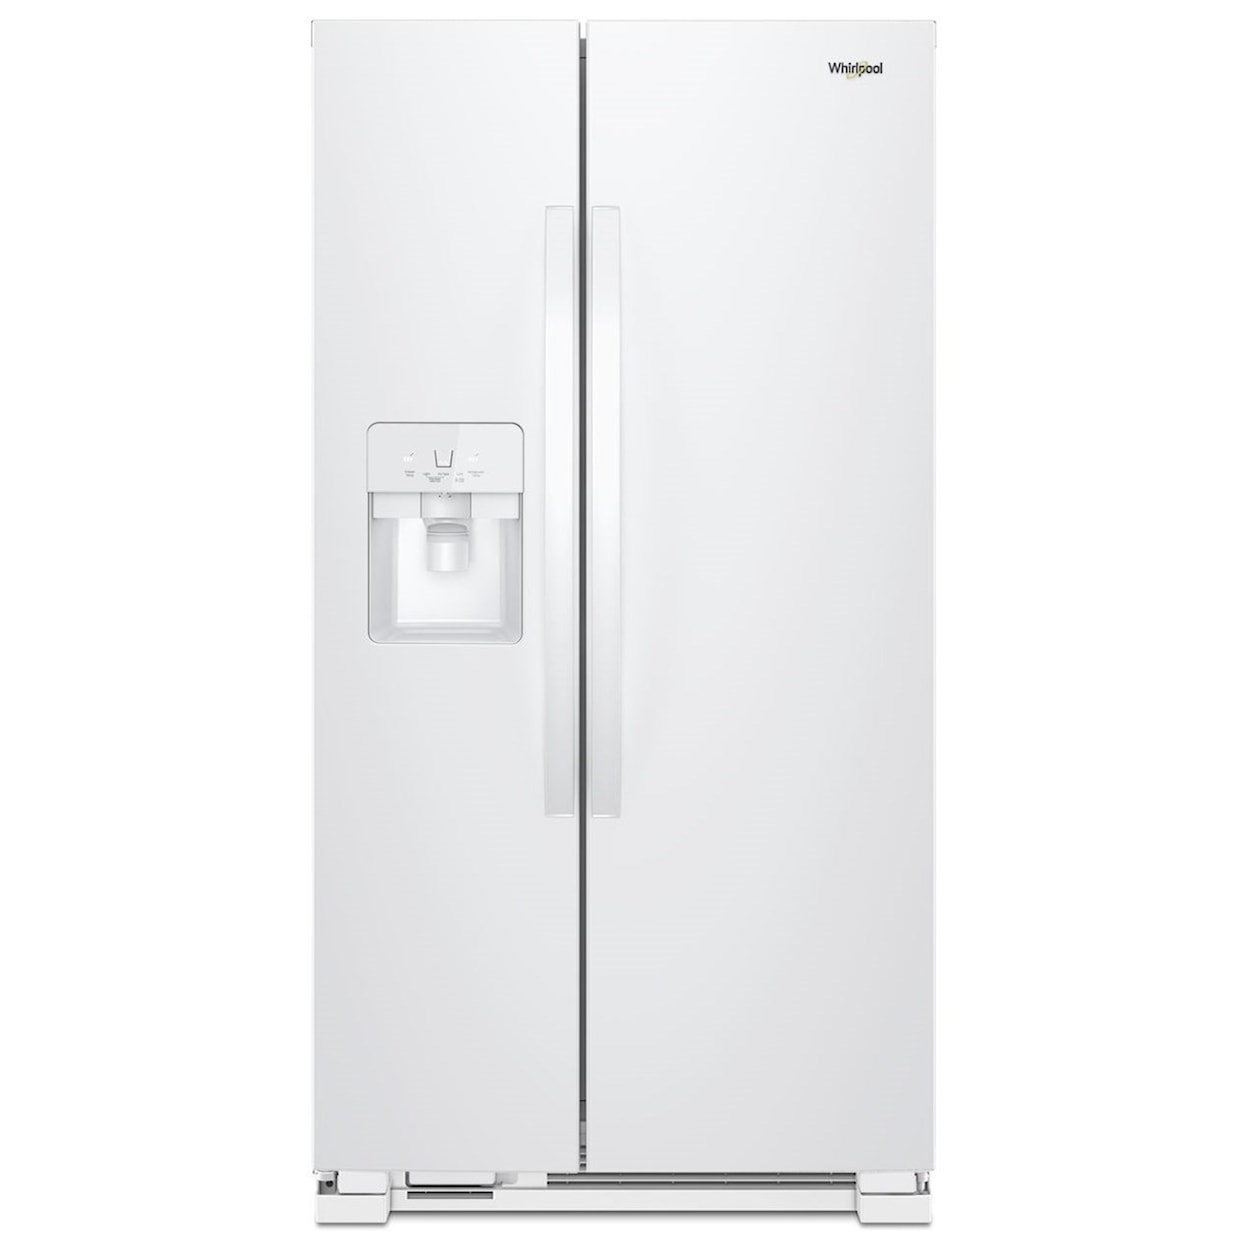 Whirlpool Side-By-Side Refrigerators 33" Side-by-Side Refrigerator